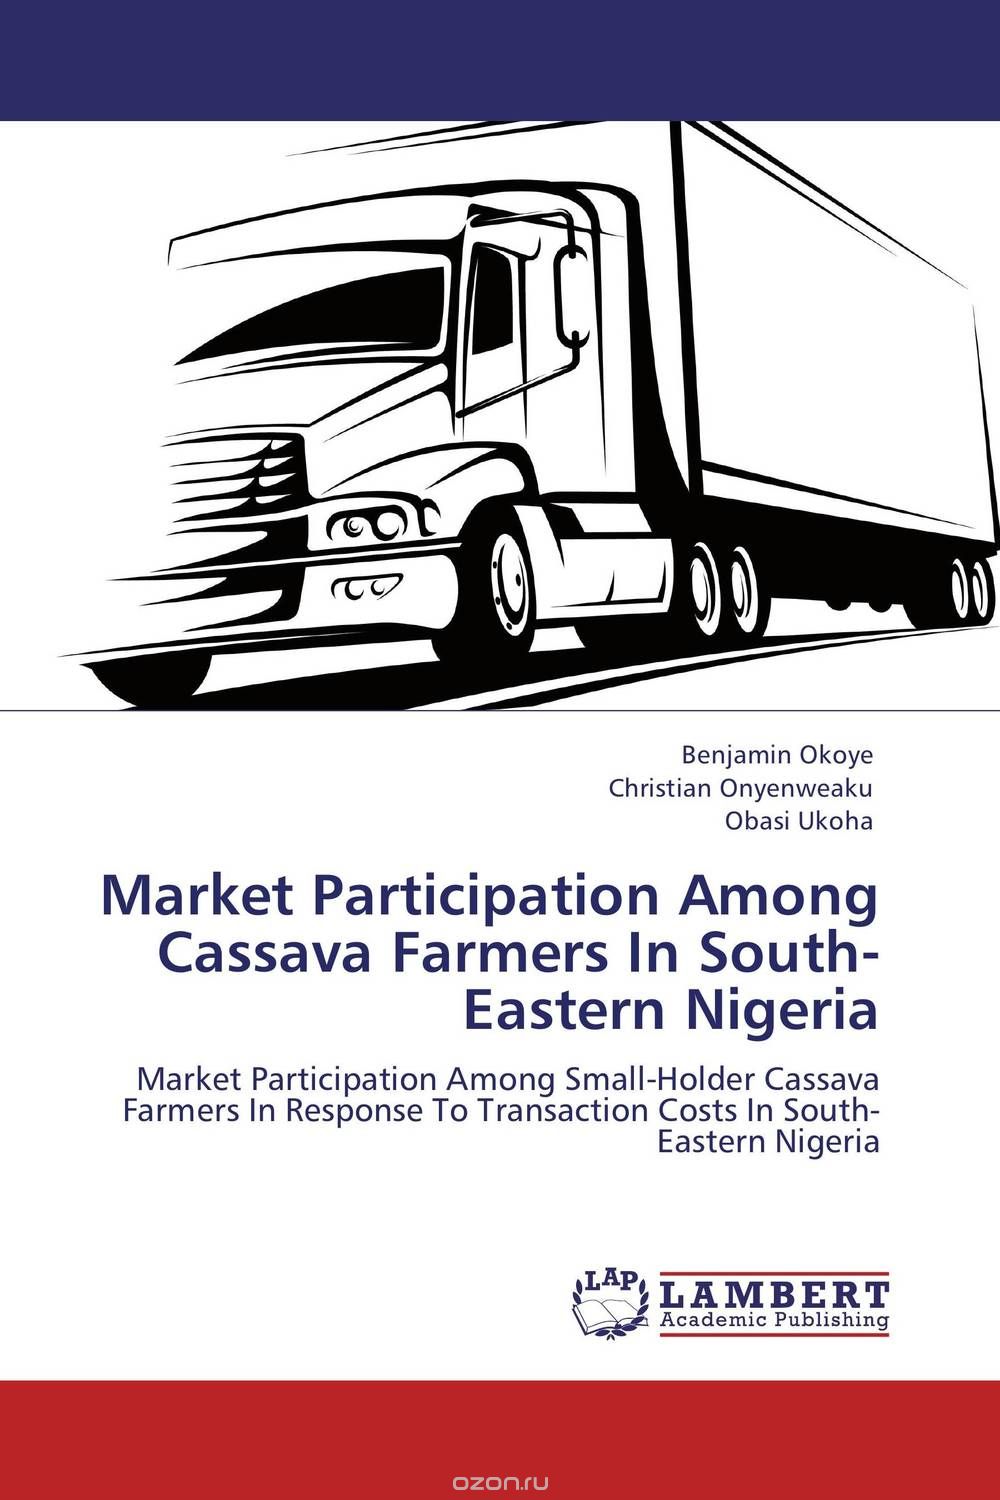 Скачать книгу "Market Participation Among Cassava Farmers In South-Eastern Nigeria"